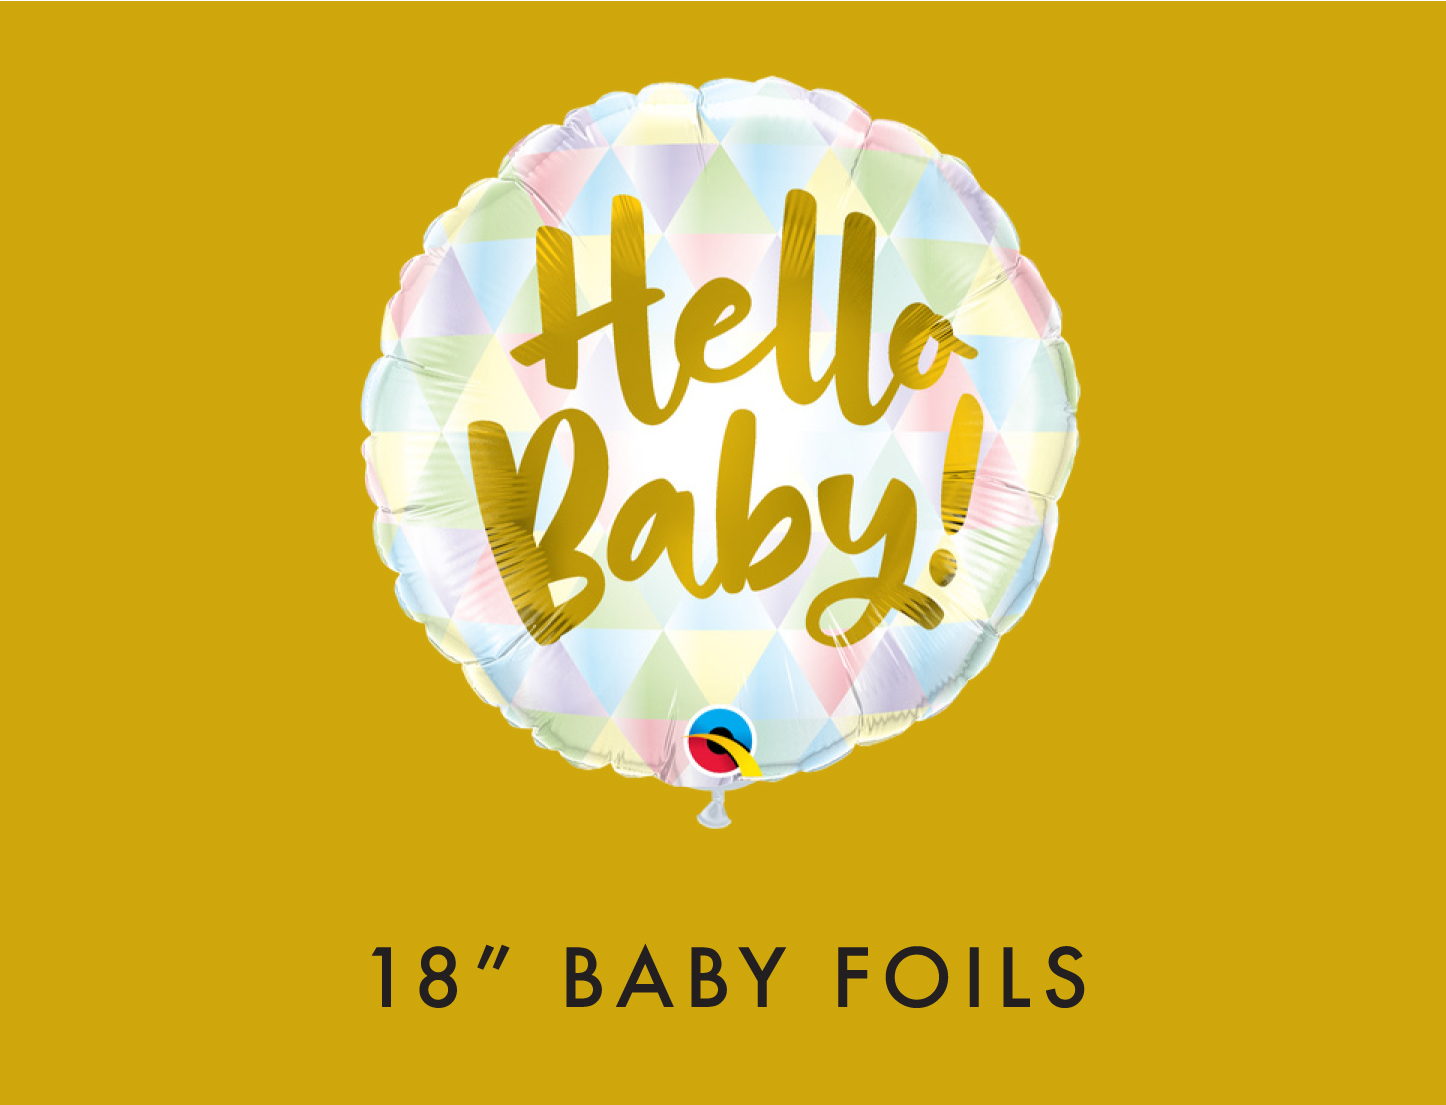 45cm (18") Baby Foil Balloons